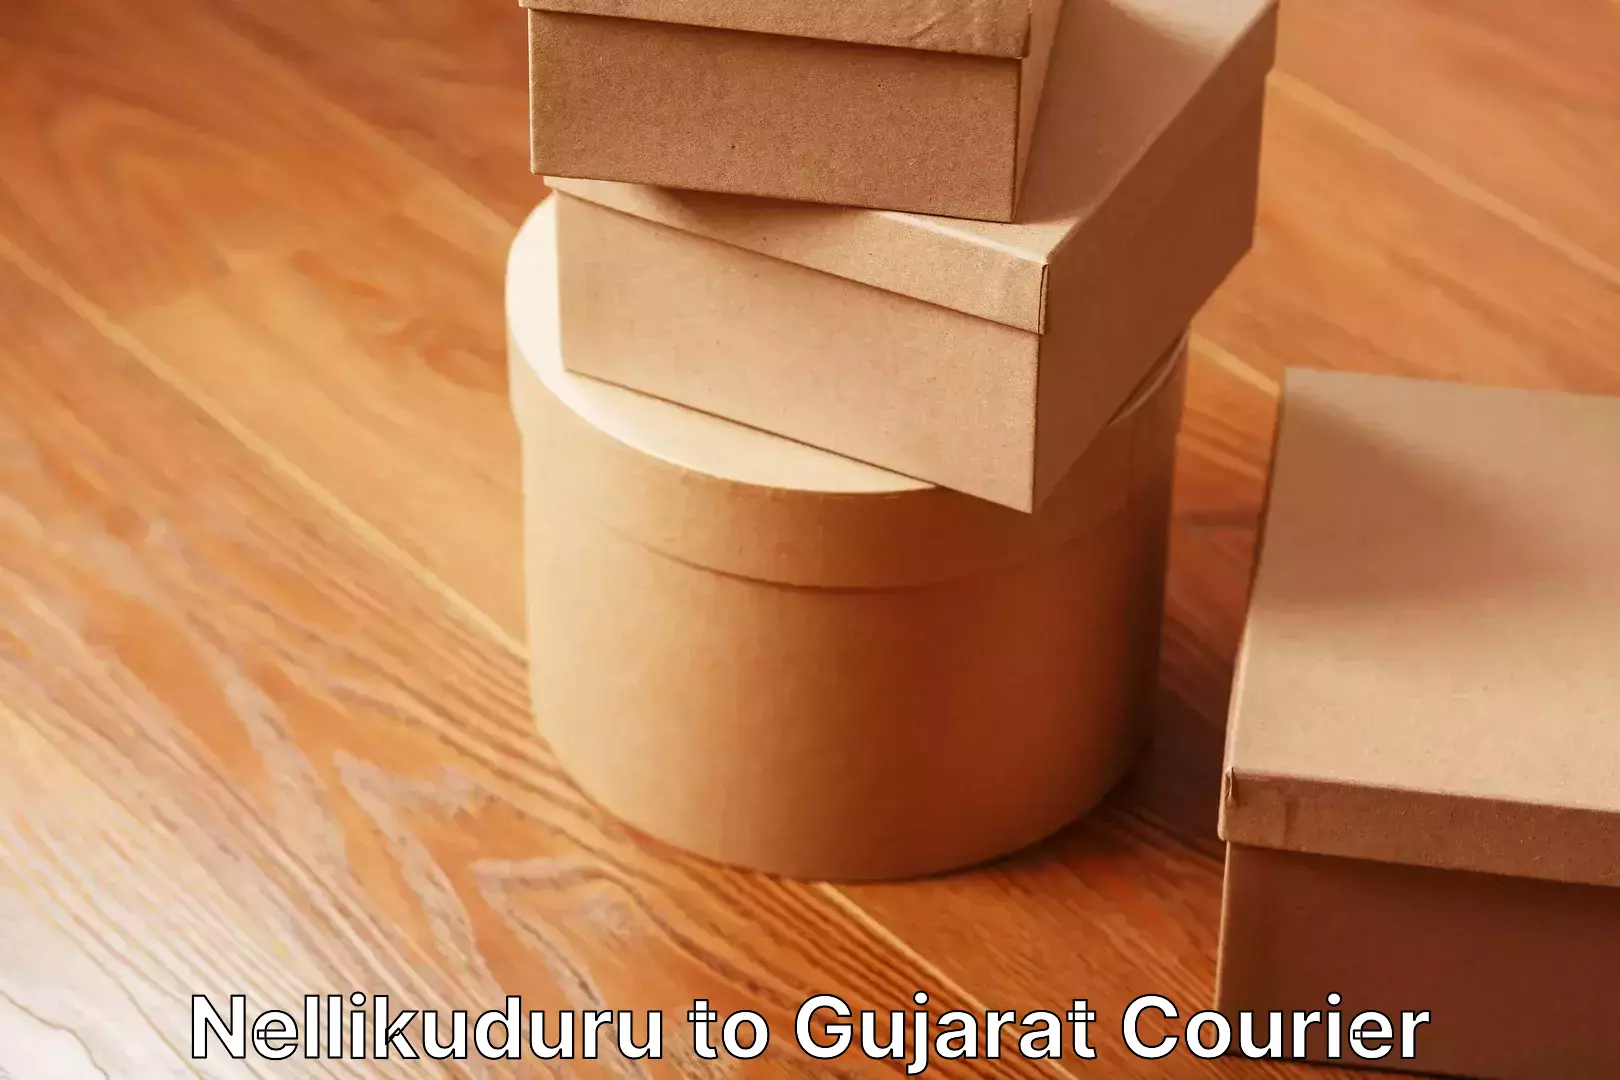 Moving service excellence Nellikuduru to Gujarat